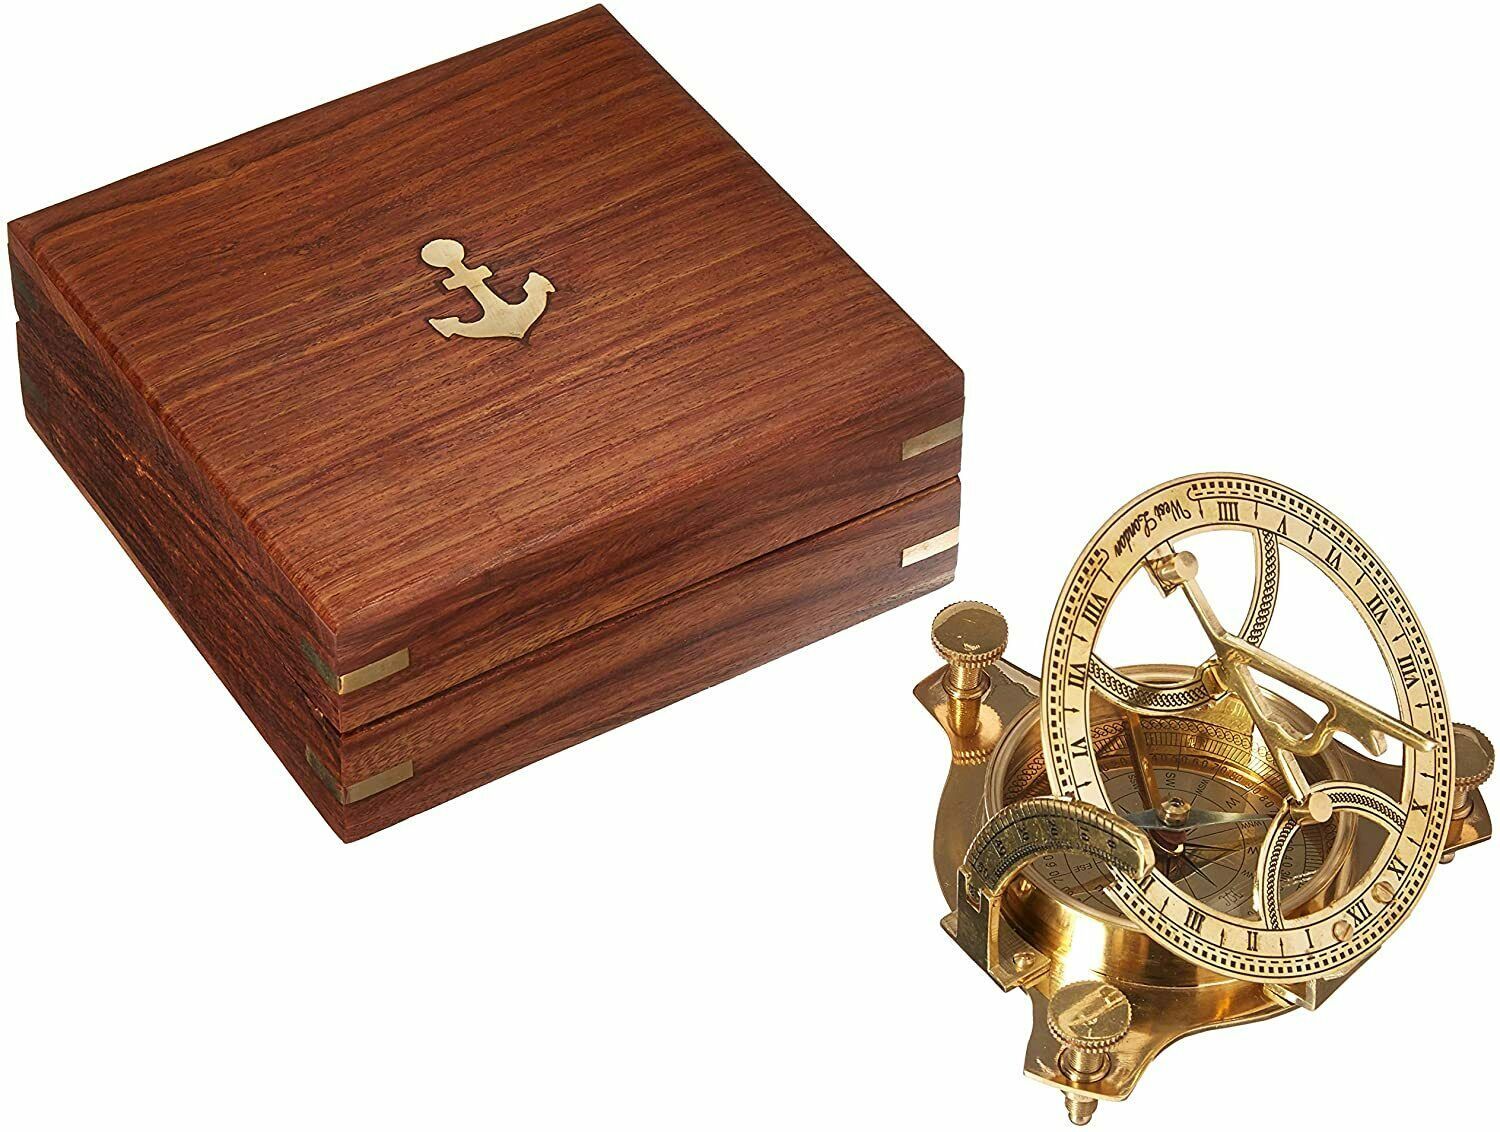 Primary image for NauticalMart Solid Brass 3" Sundial Compass - W/Inlaid Hardwood Box